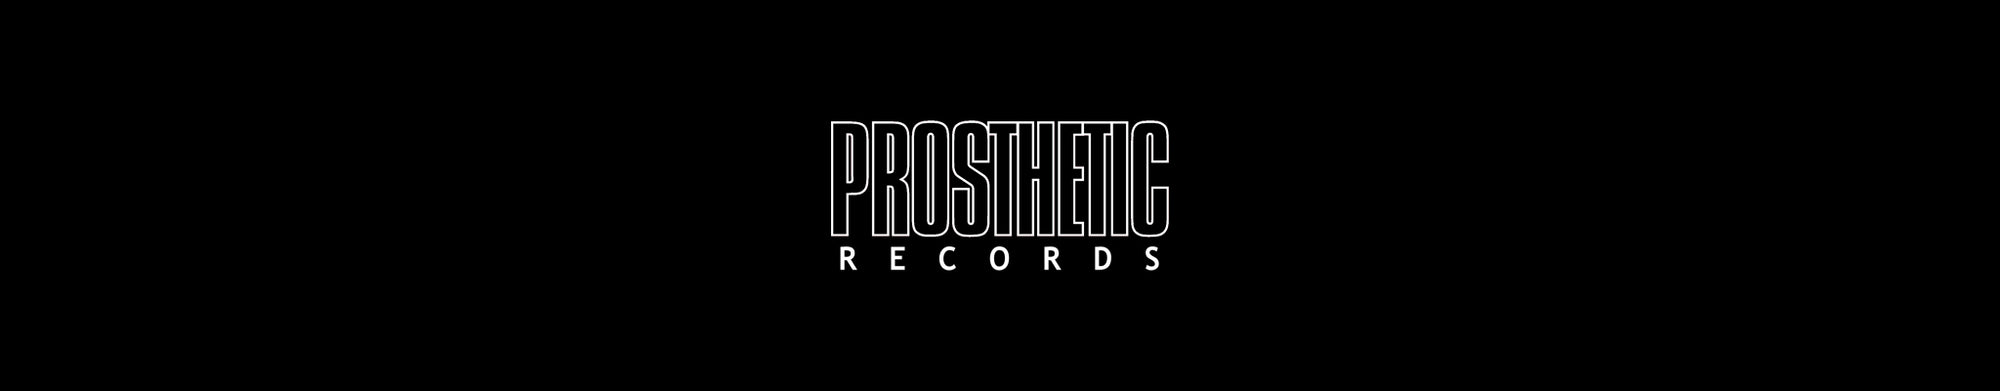 PROTHETIC RECORDS